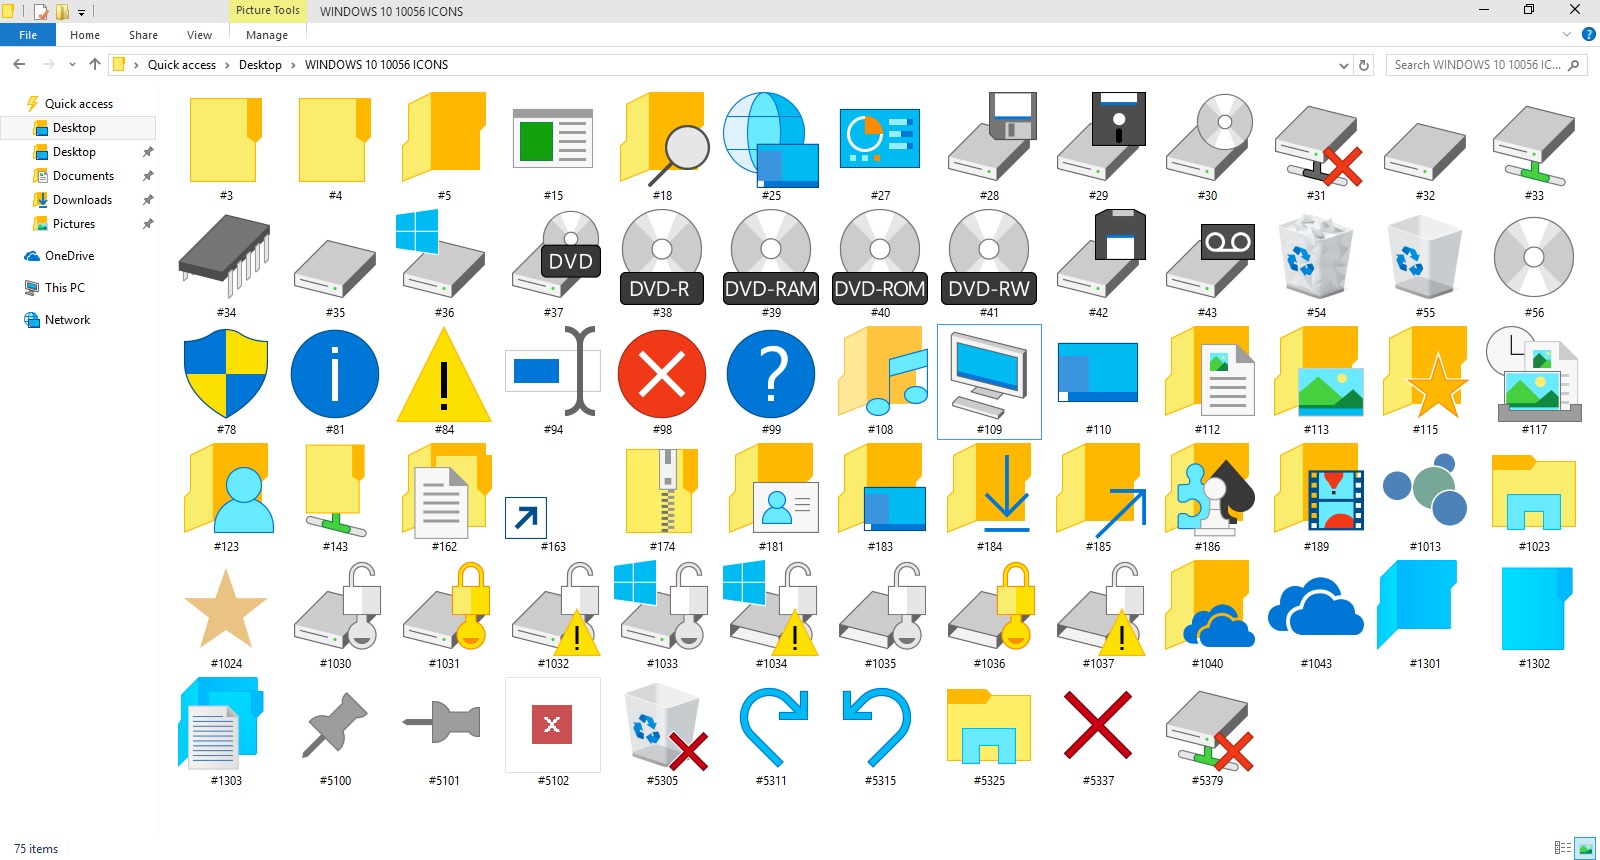 Windows 8 Desktop Icons Gone